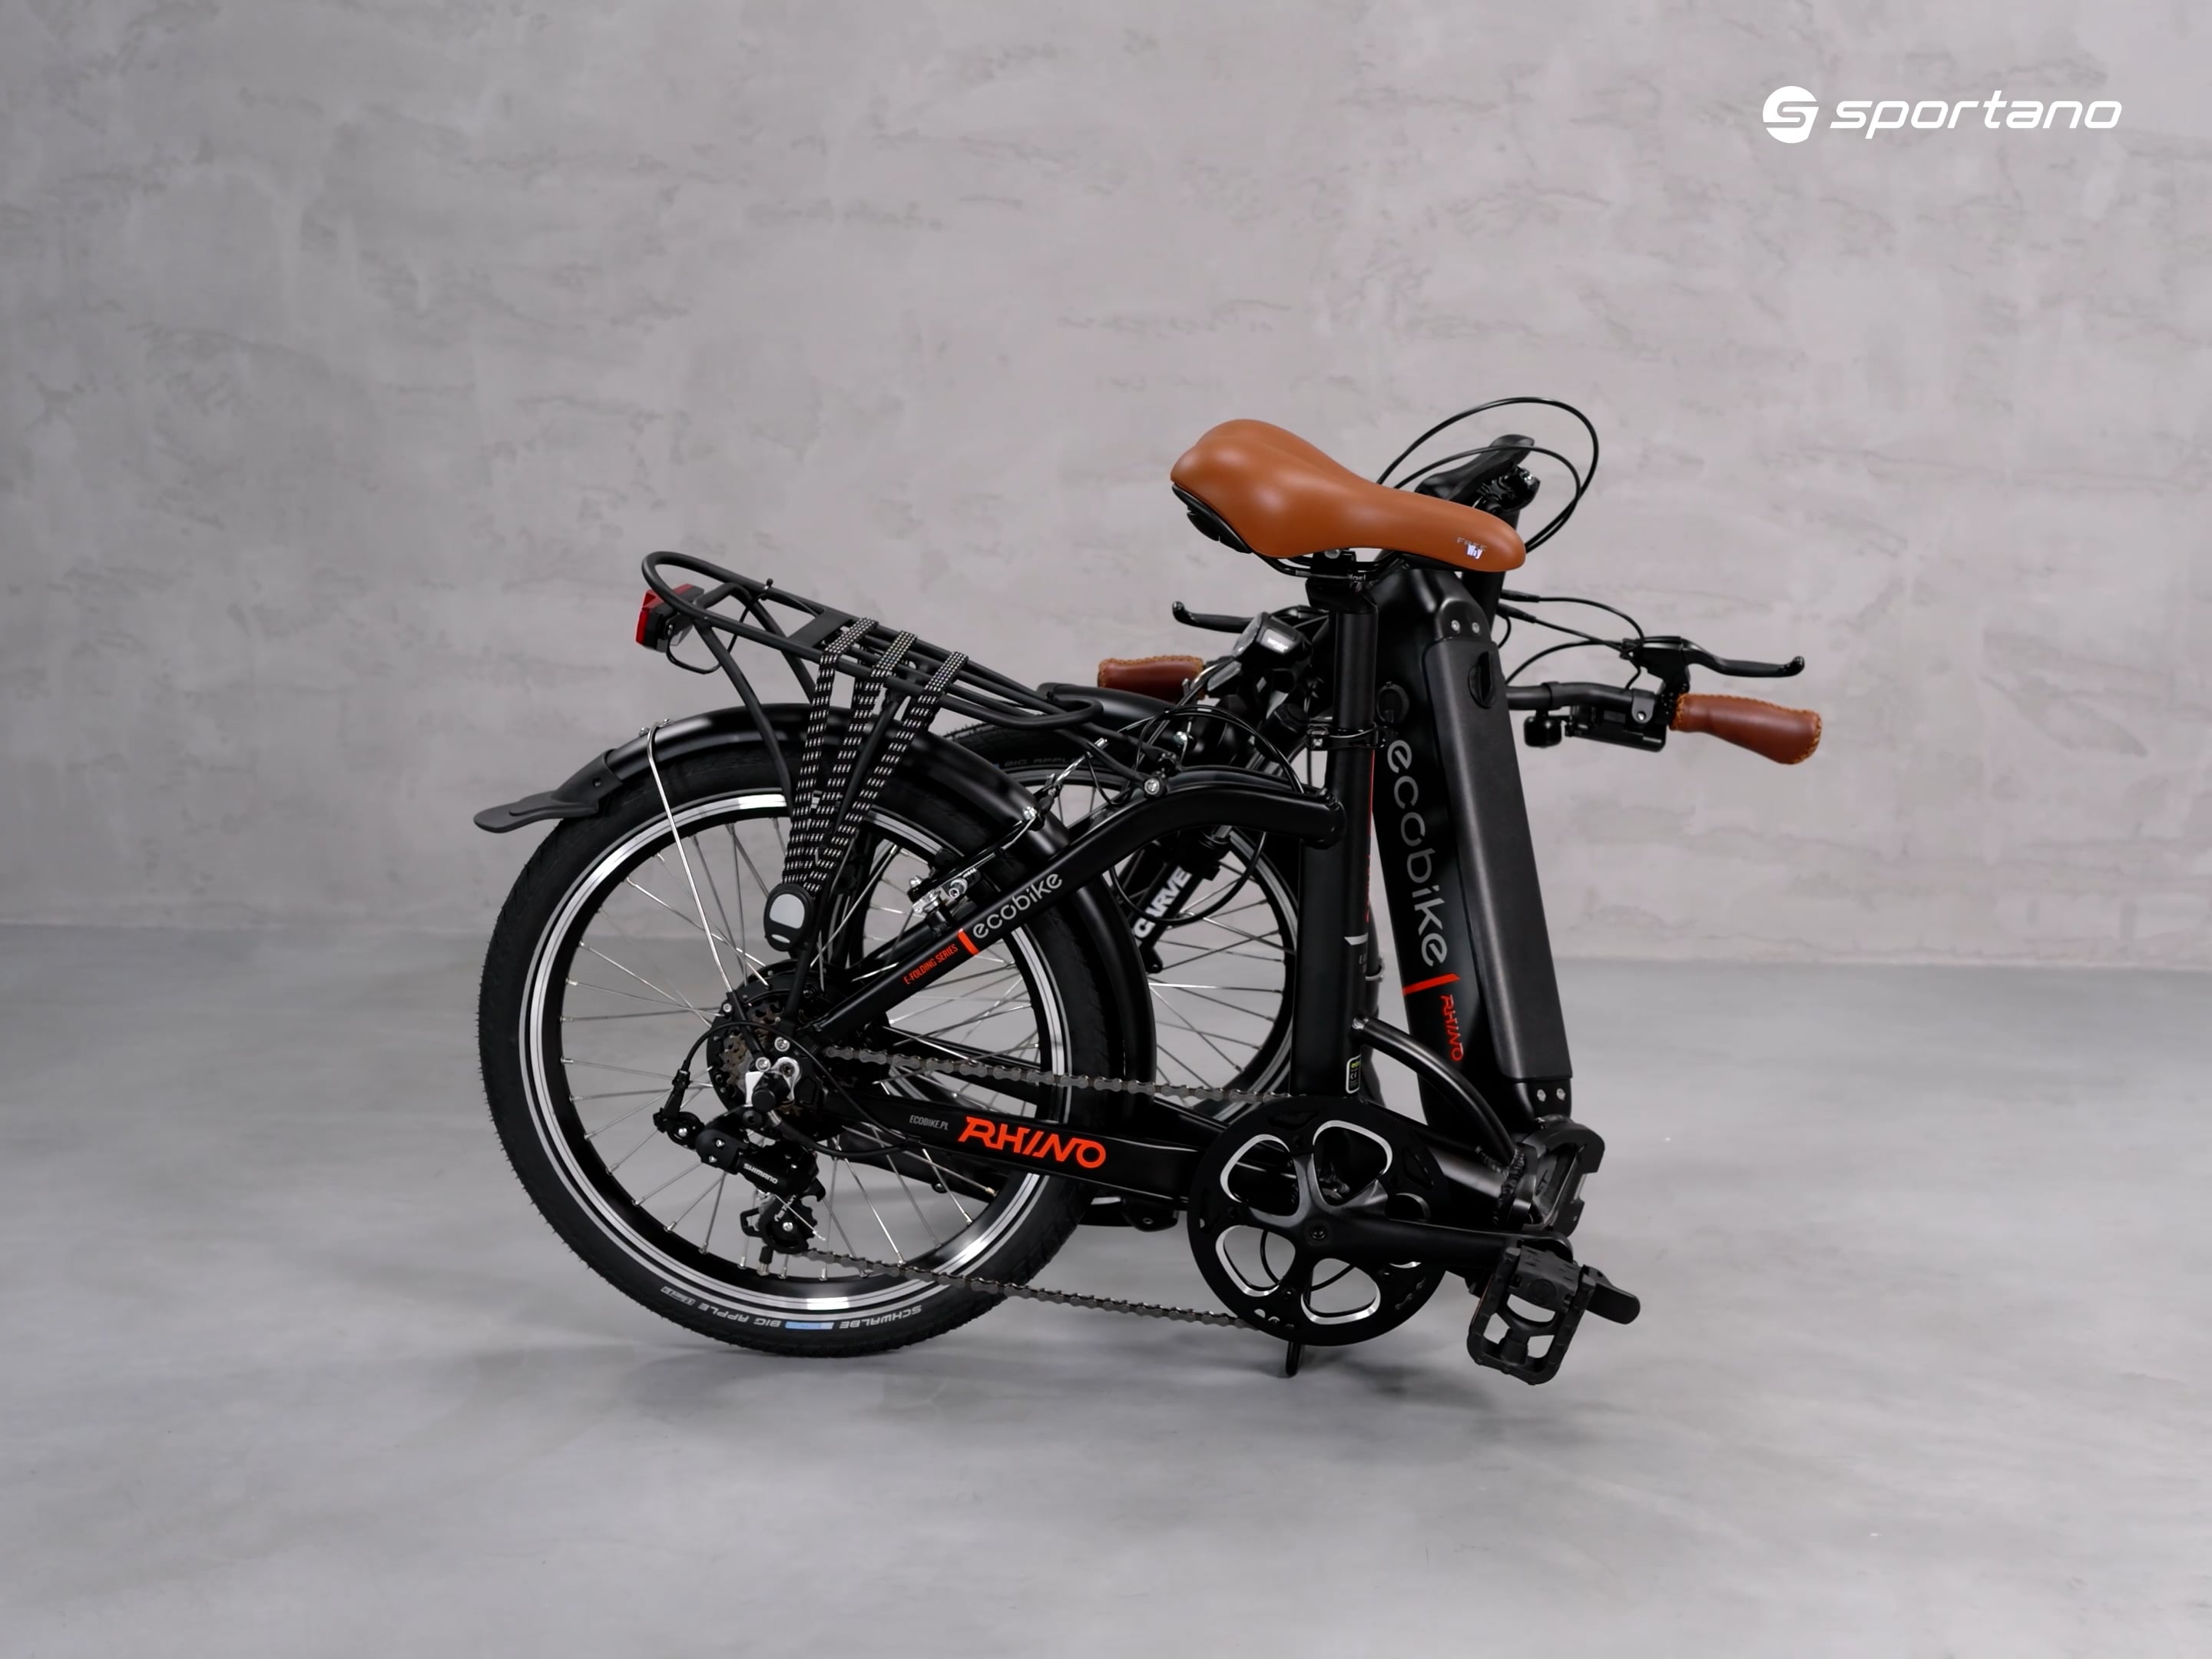 Ecobike Rhino biciclete electrice negru 1010203